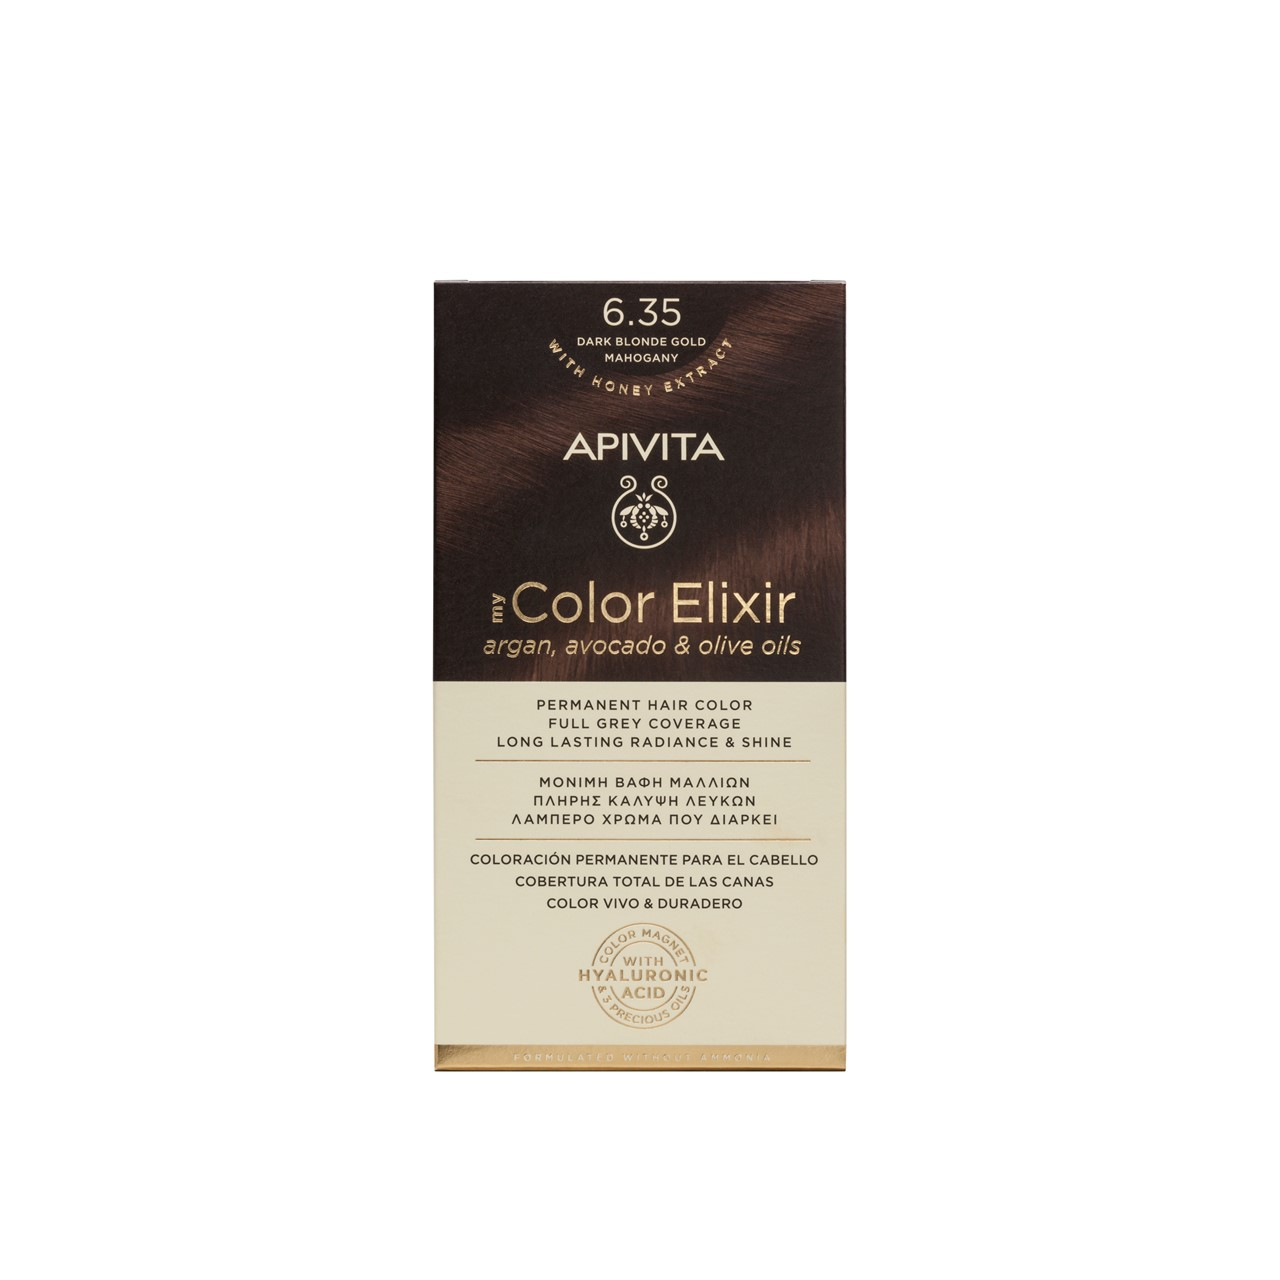 APIVITA My Color Elixir 6.35 Permanent Hair Color